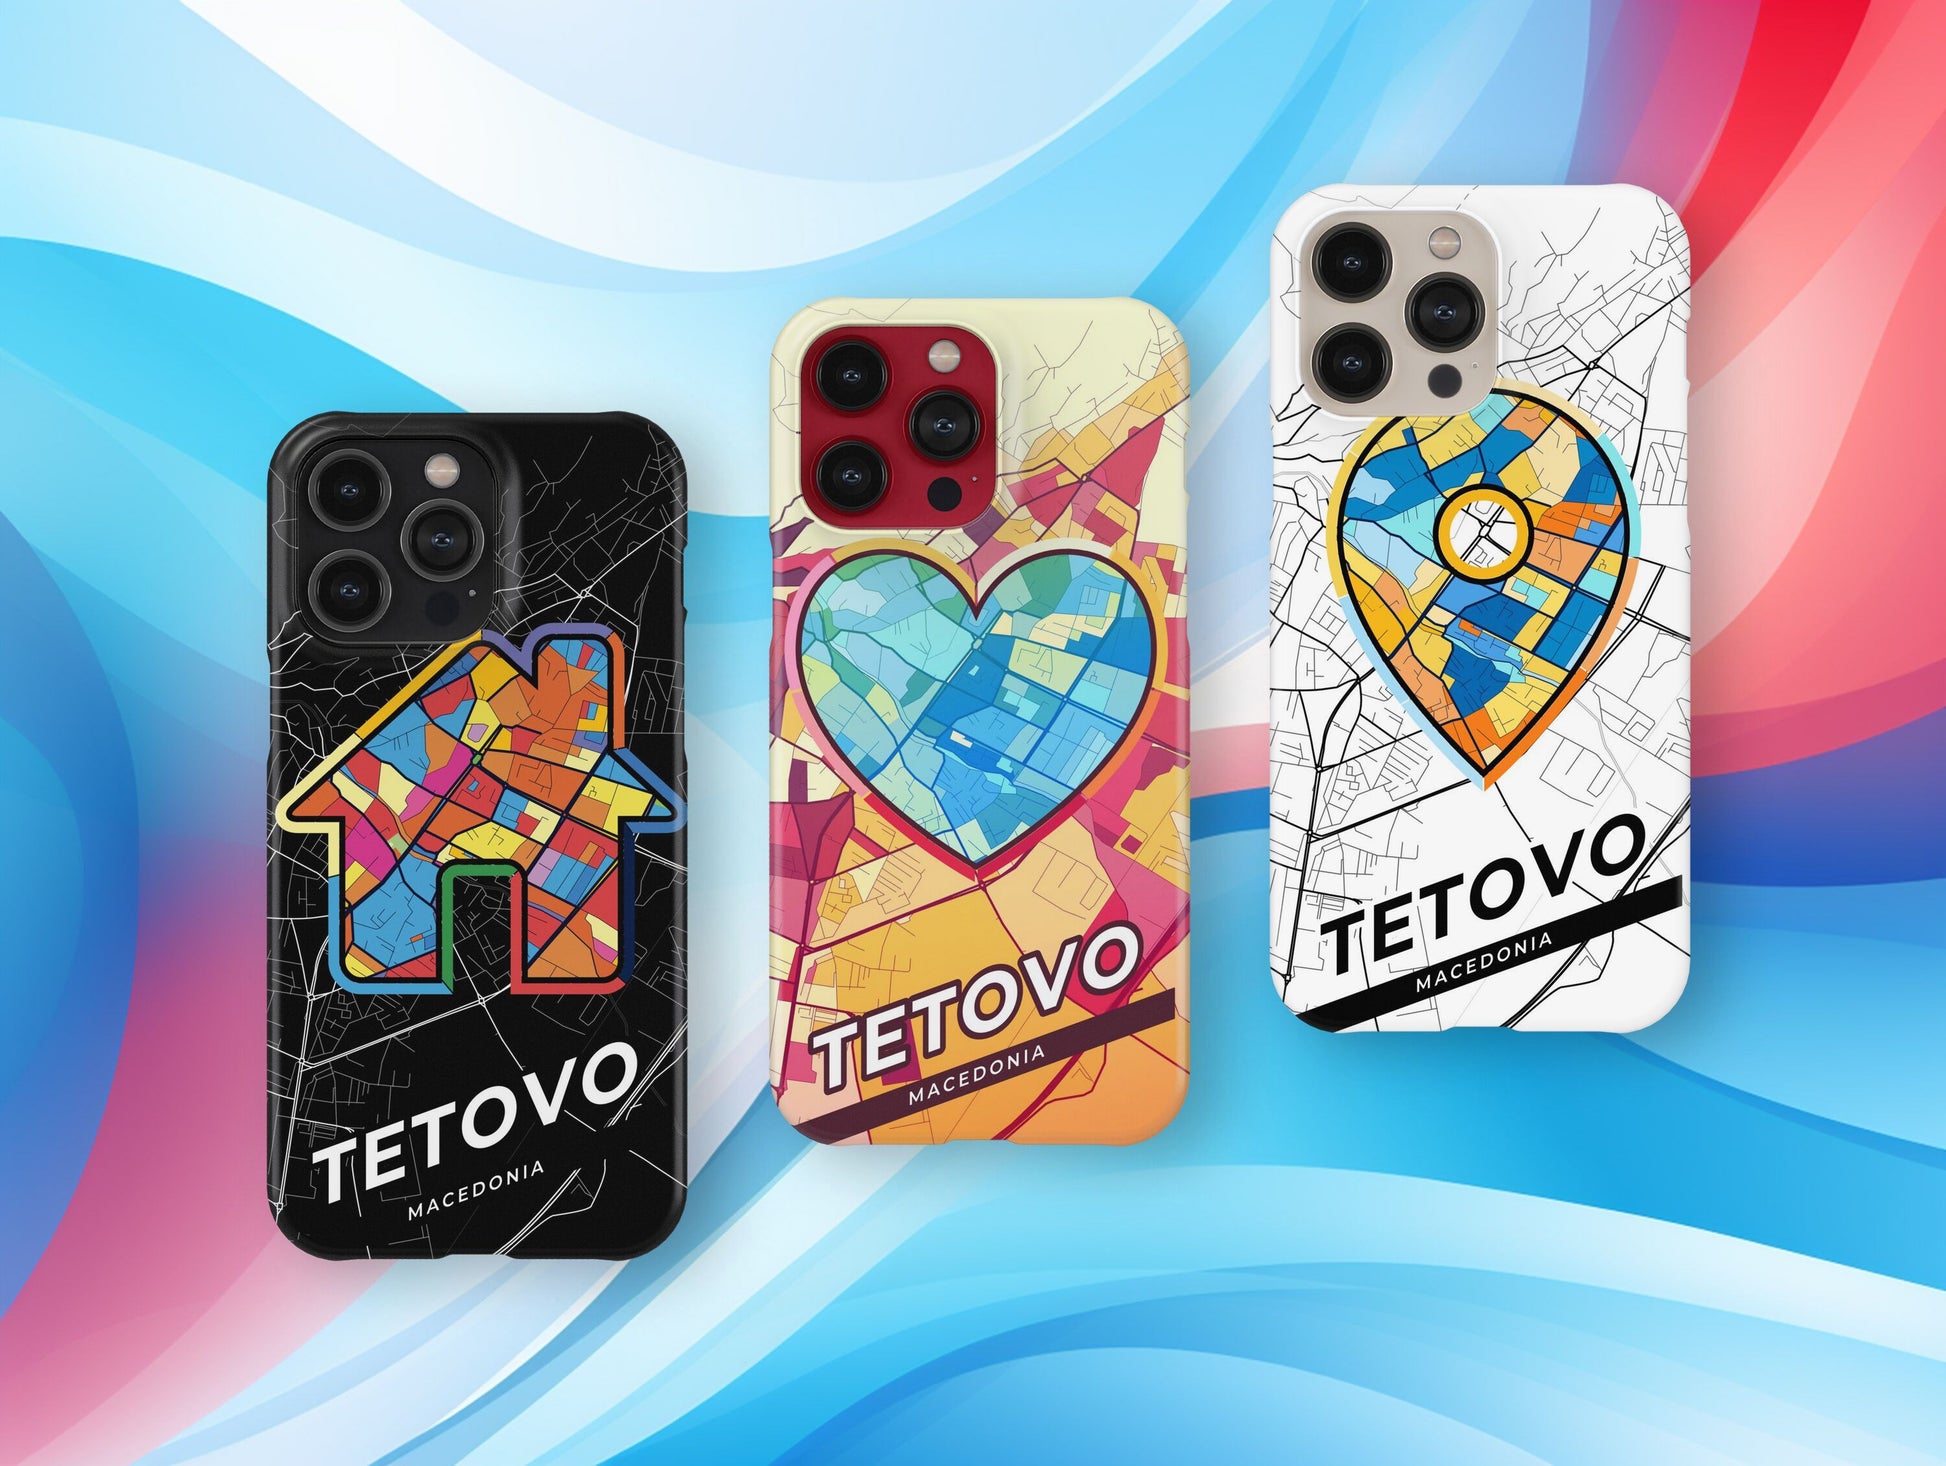 Tetovo North Macedonia slim phone case with colorful icon